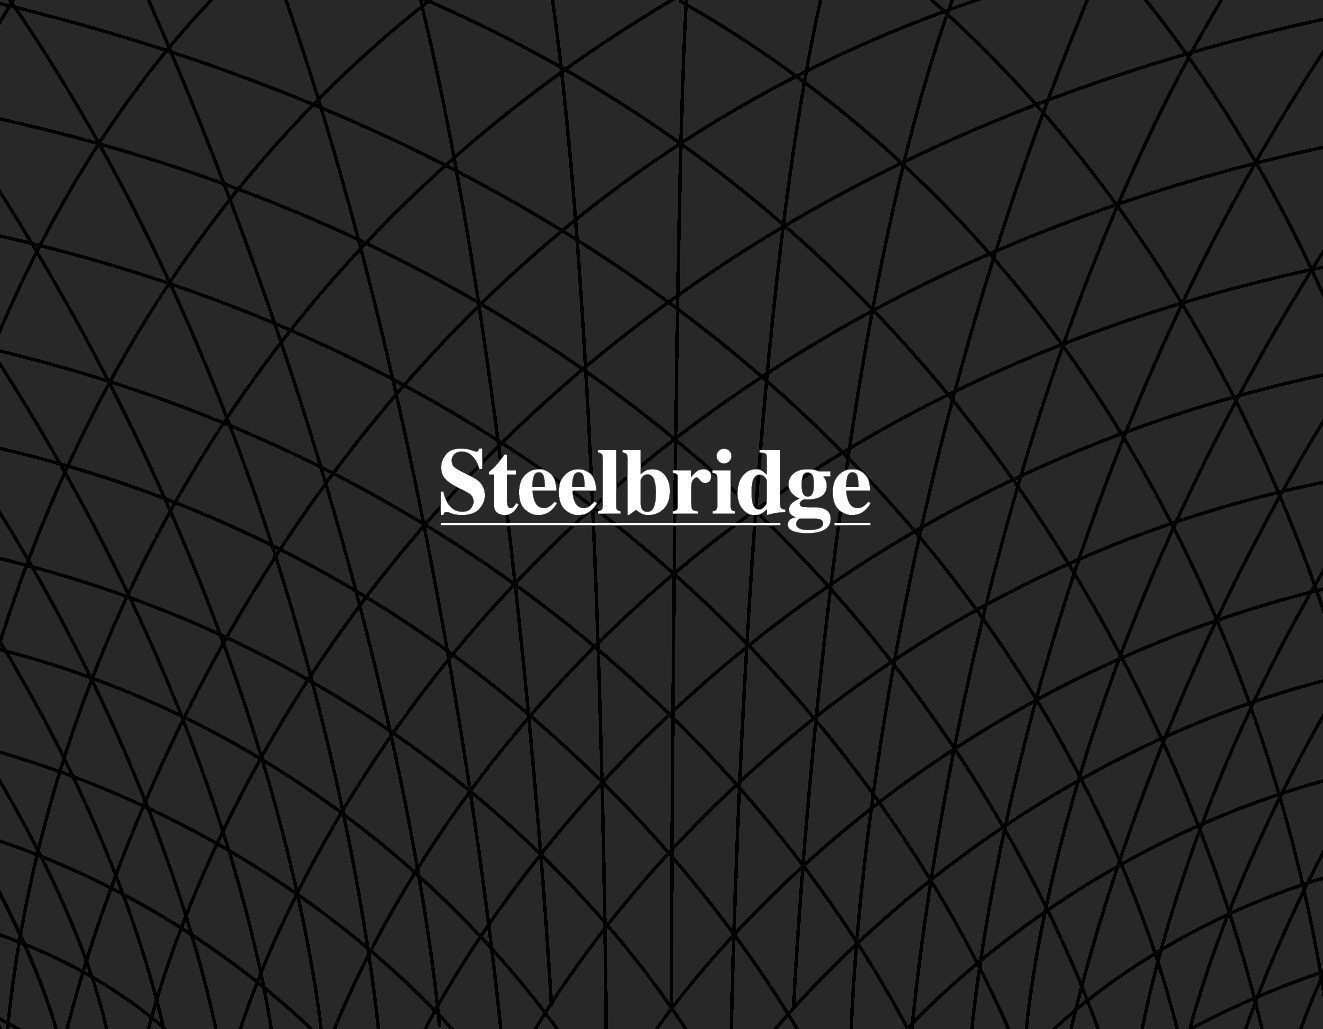 Steelbridge